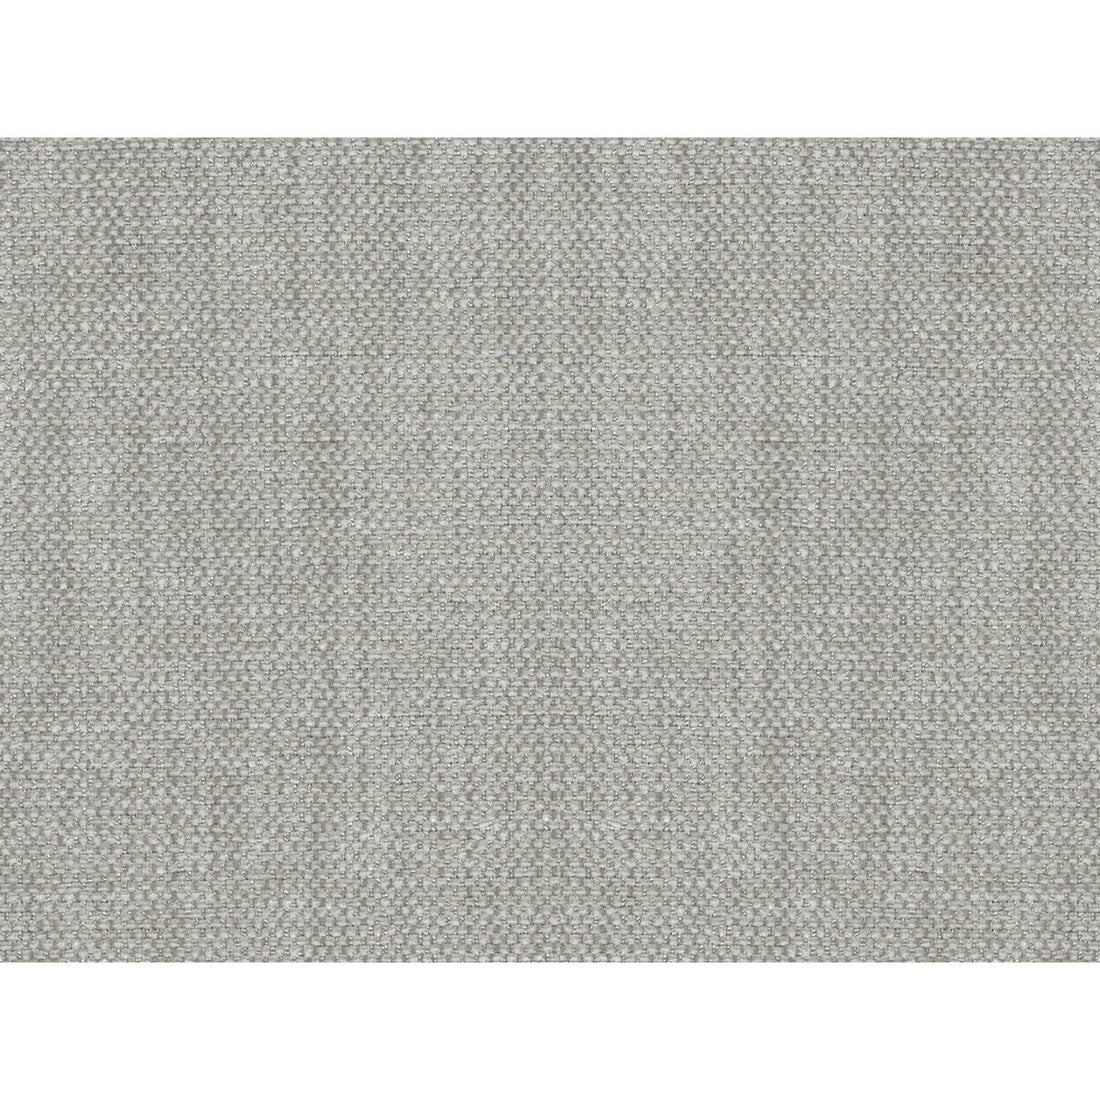 Kravet Smart fabric in 34730-11 color - pattern 34730.11.0 - by Kravet Smart in the Smart collection